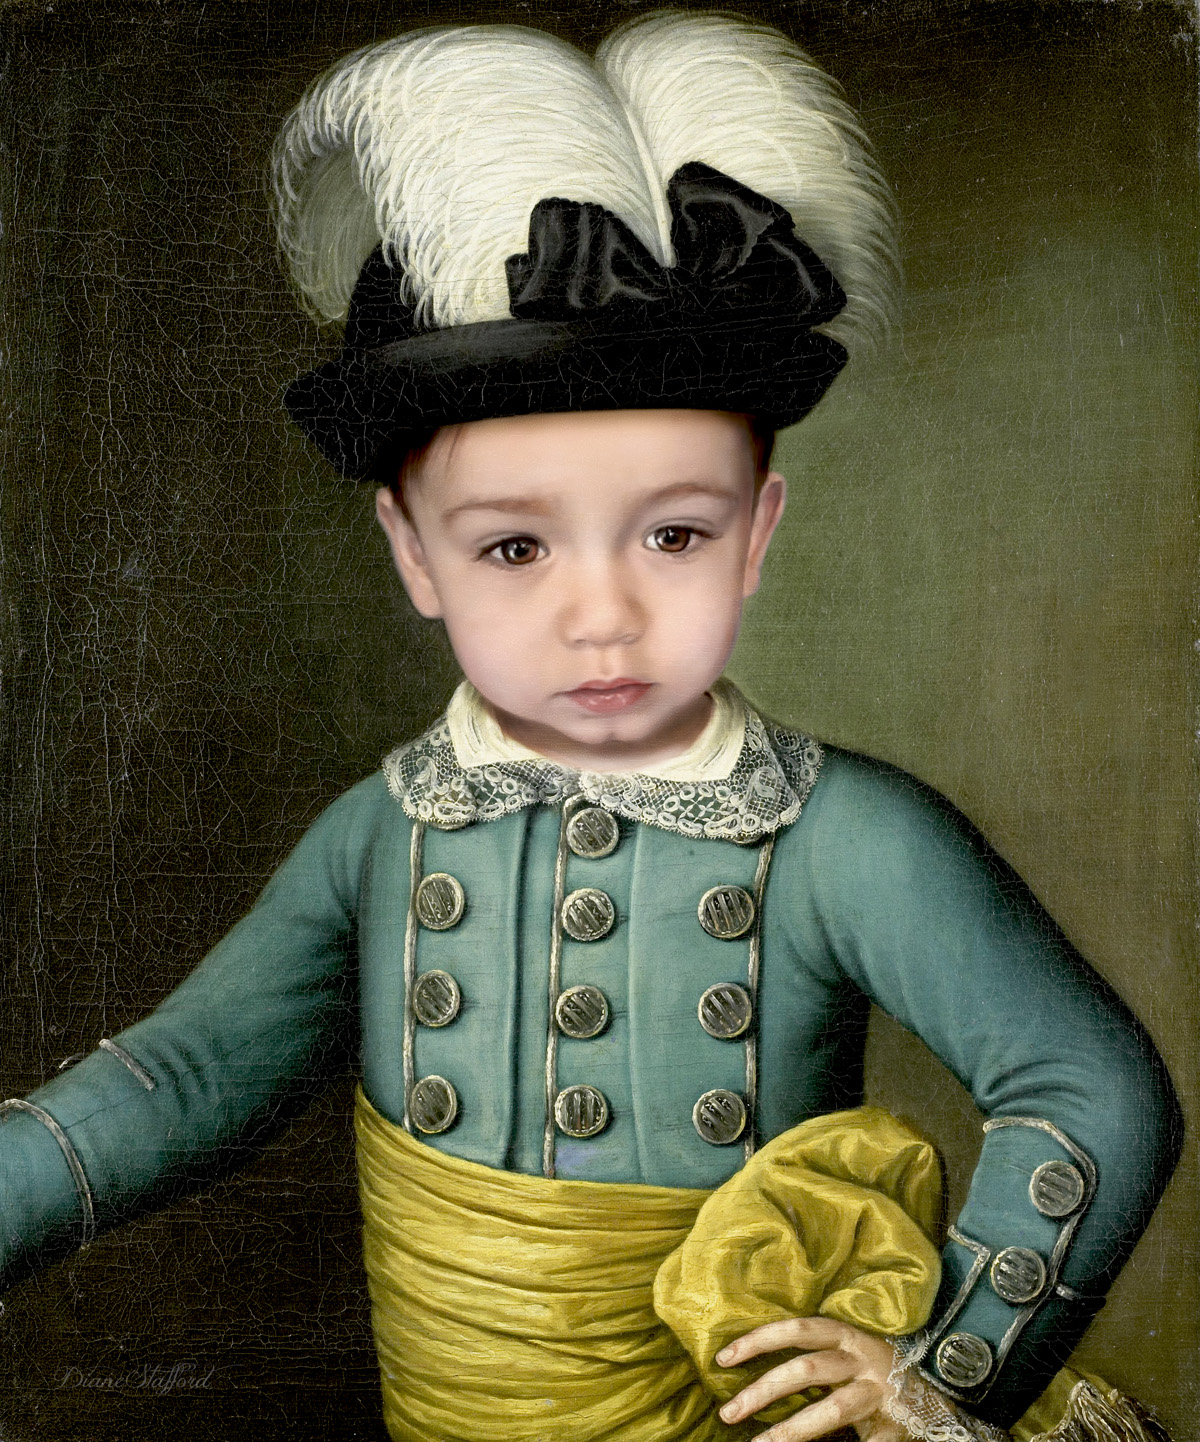 Little Prince William Portrait